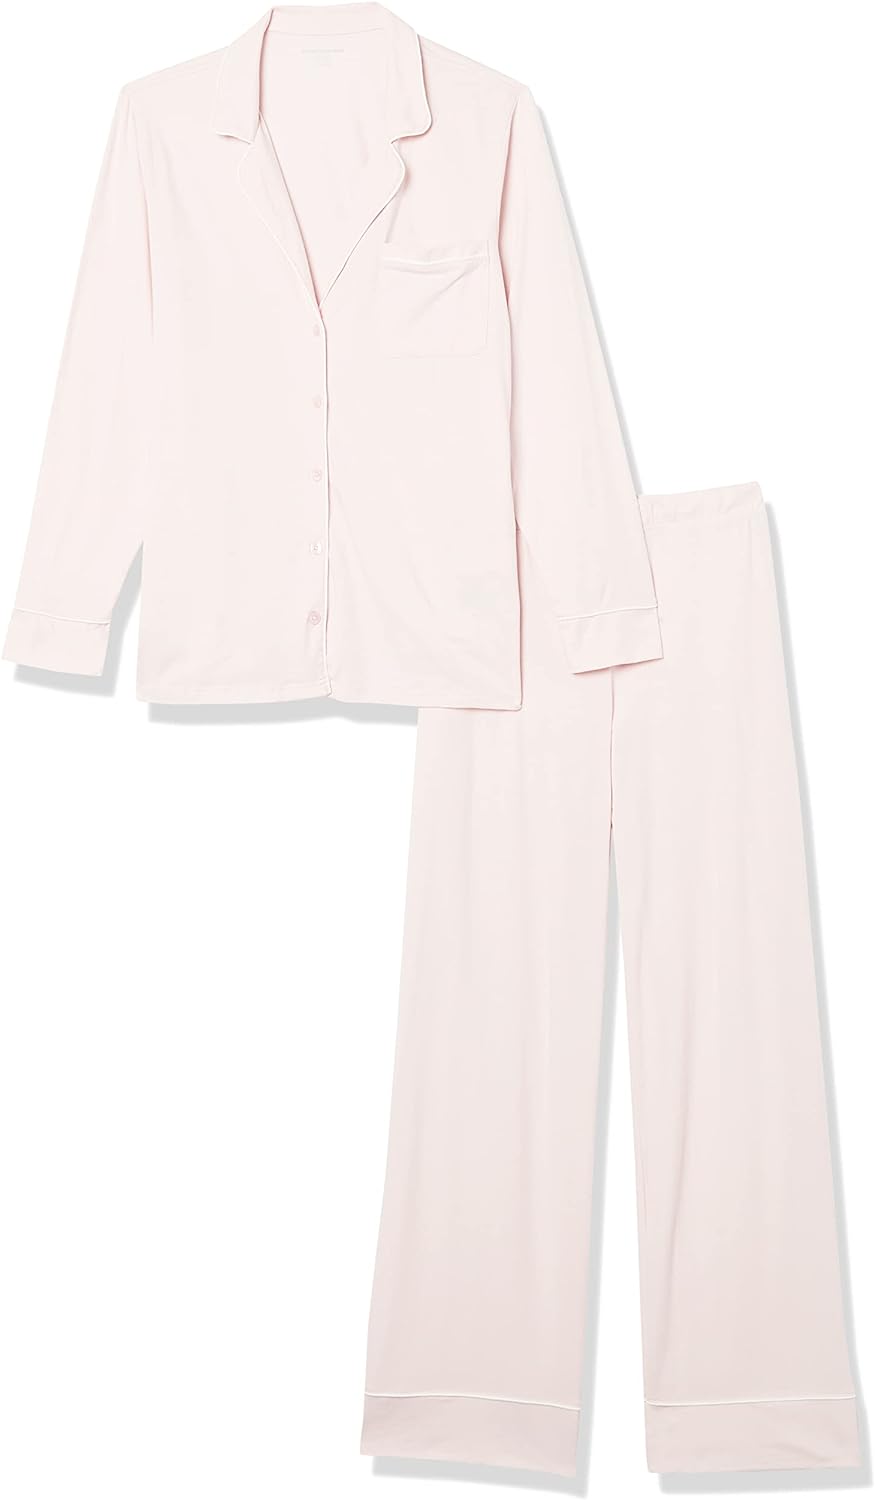 Amazon Essentials Women's Cotton Modal Long-Sleeve Pajama Set: A Cozy and Stylish Choice